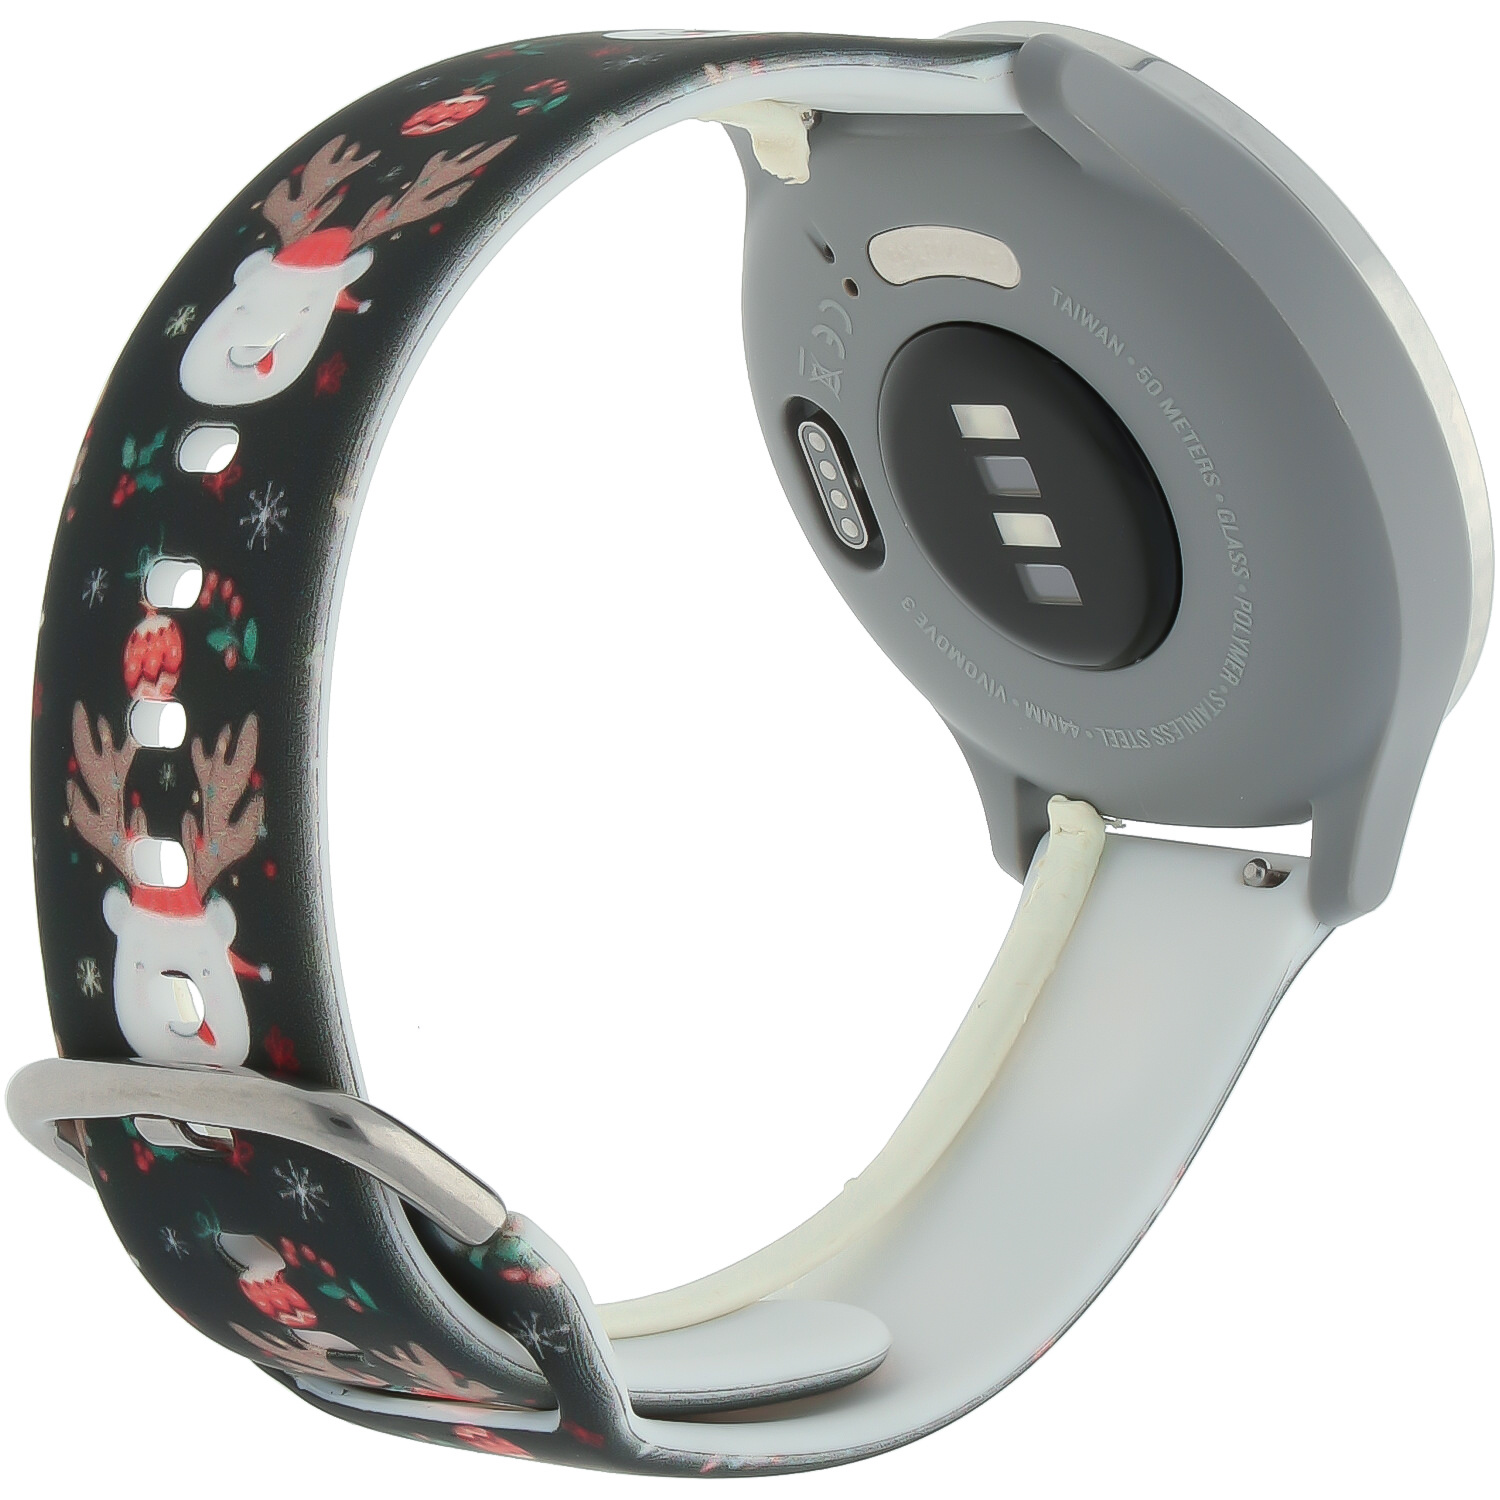 Huawei Watch druck Sportarmband - Weihnachtsrentier